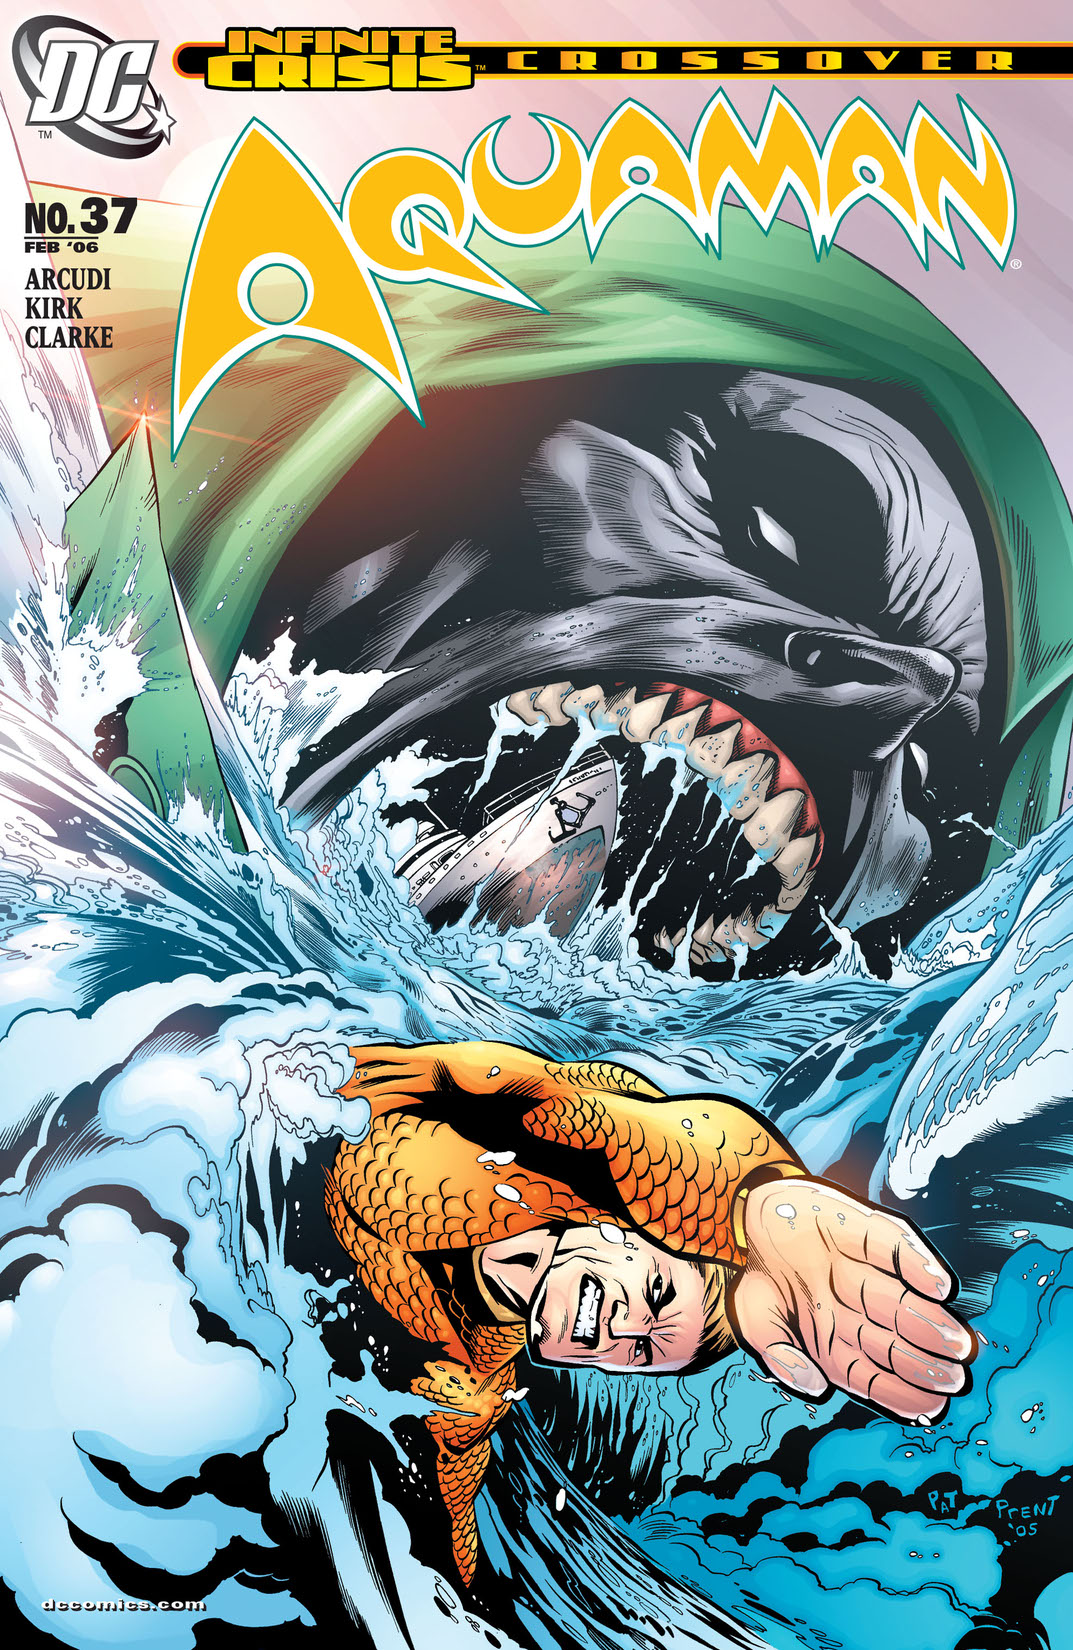 Aquaman by Rick Veitch